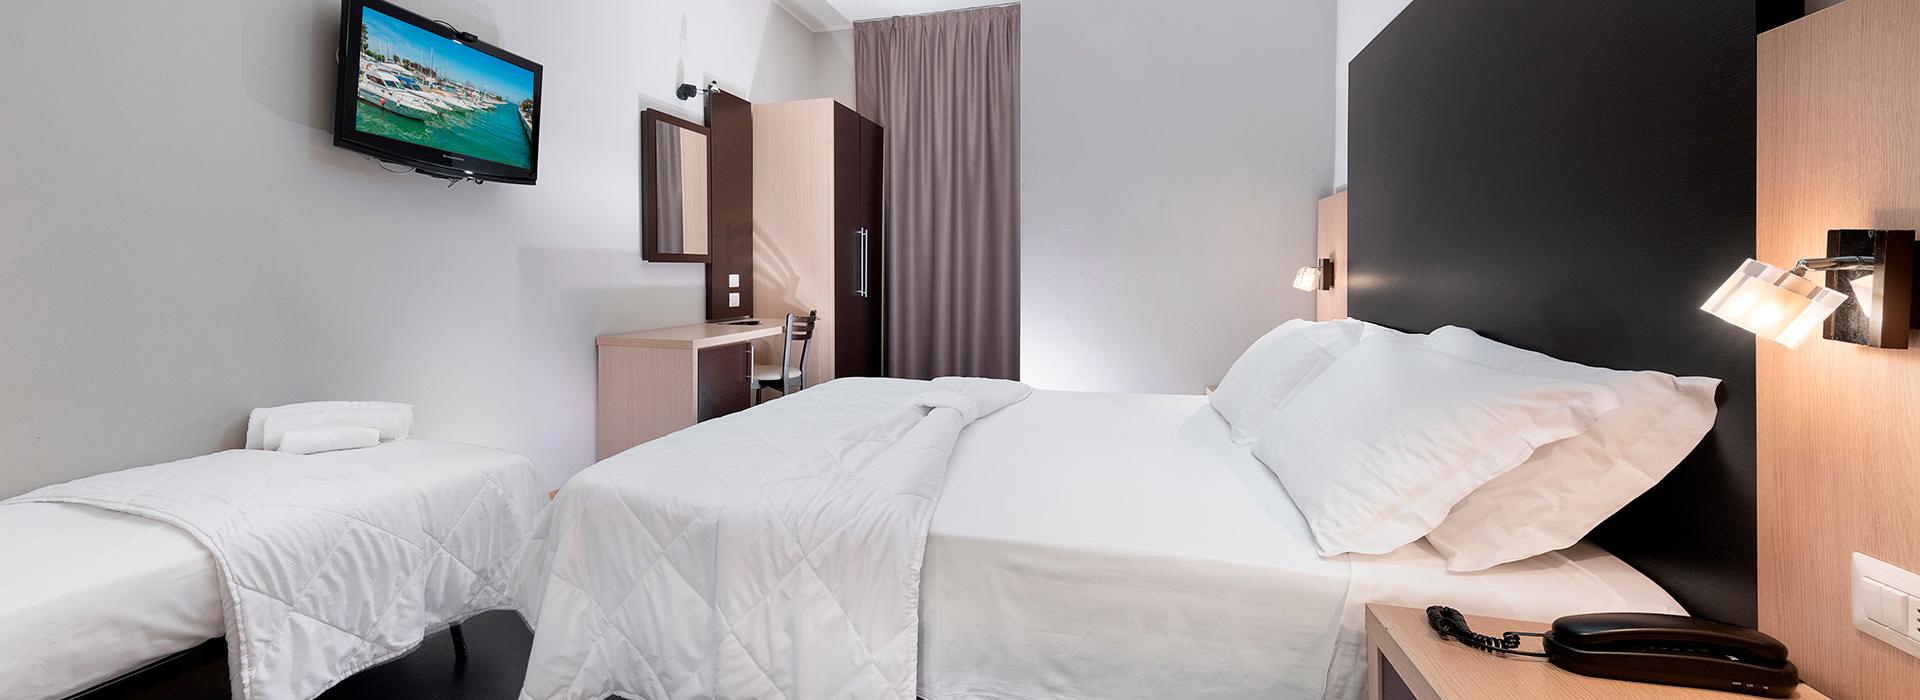 hotelaiglonrimini en room-smart 012